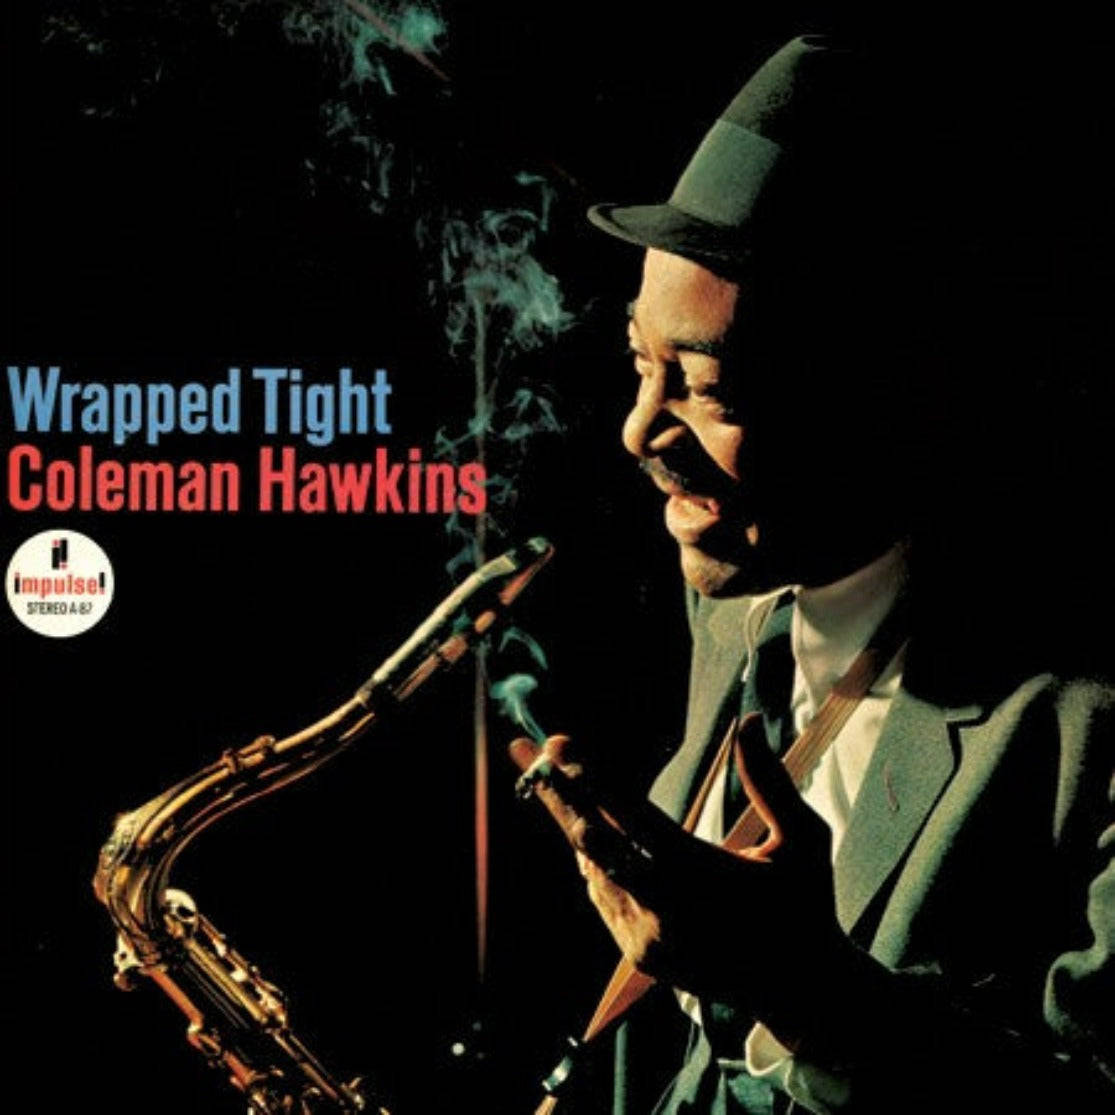 Coleman Hawkins Wrapped Tight Album Wallpaper